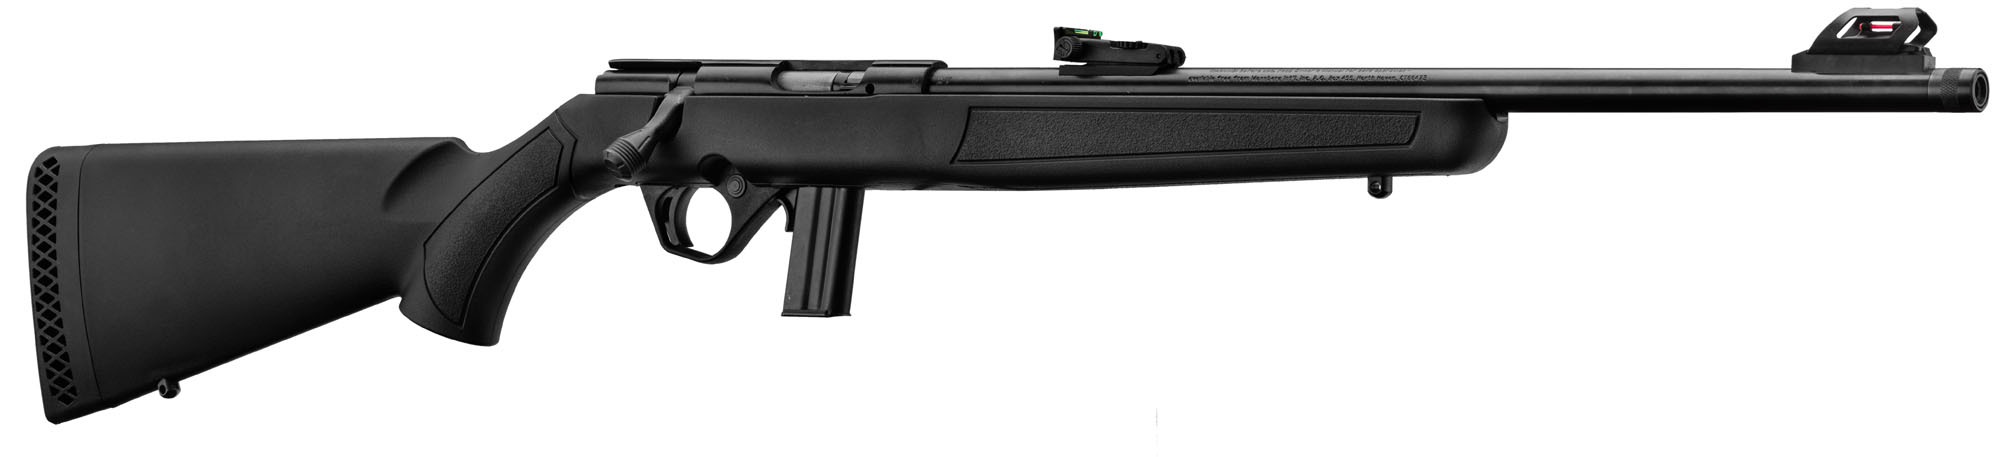 CR200 Carabine Mossberg Plinkster 802 synthétique noire cal.22 LR